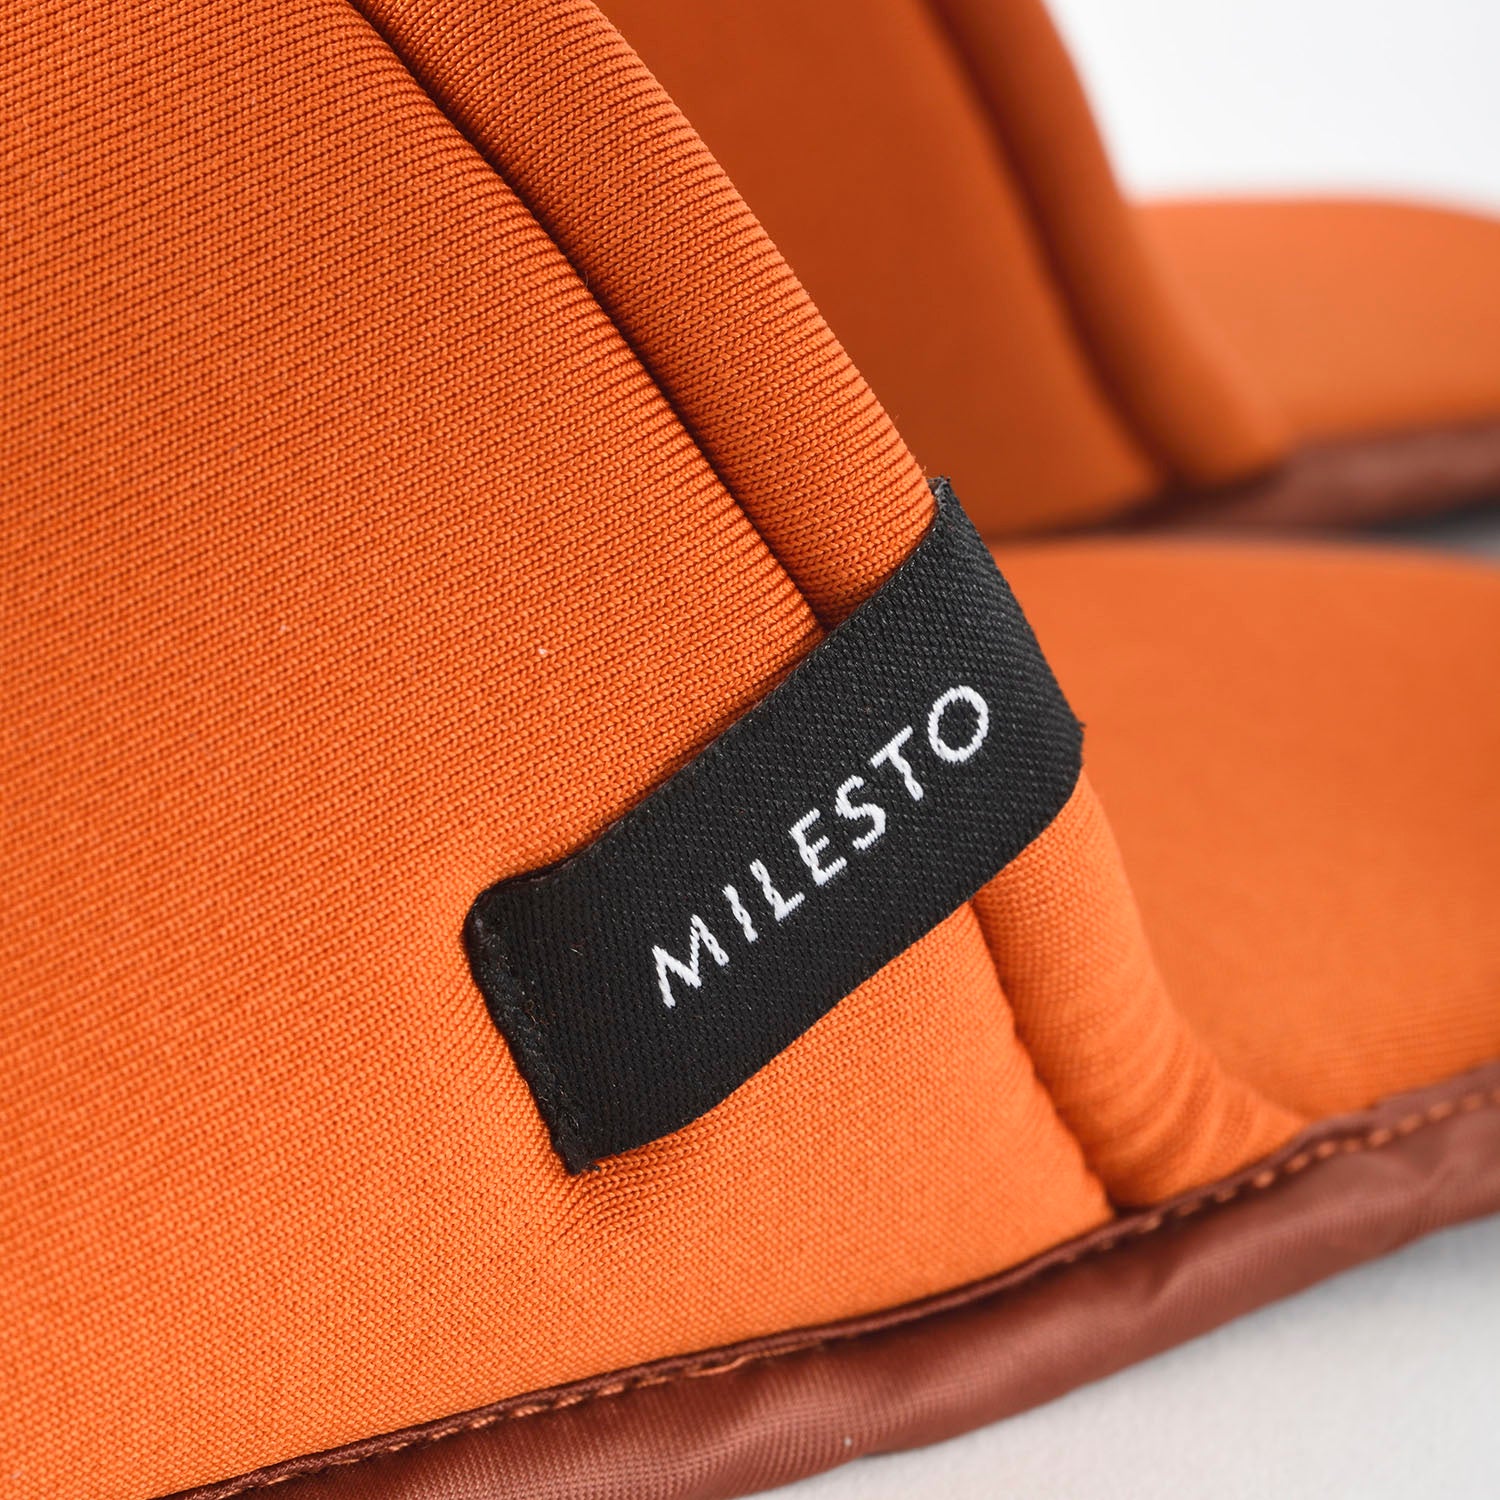 MILESTO UTILITY 可清洗式摺疊拖鞋 M - 深藍色 MLS607-NV